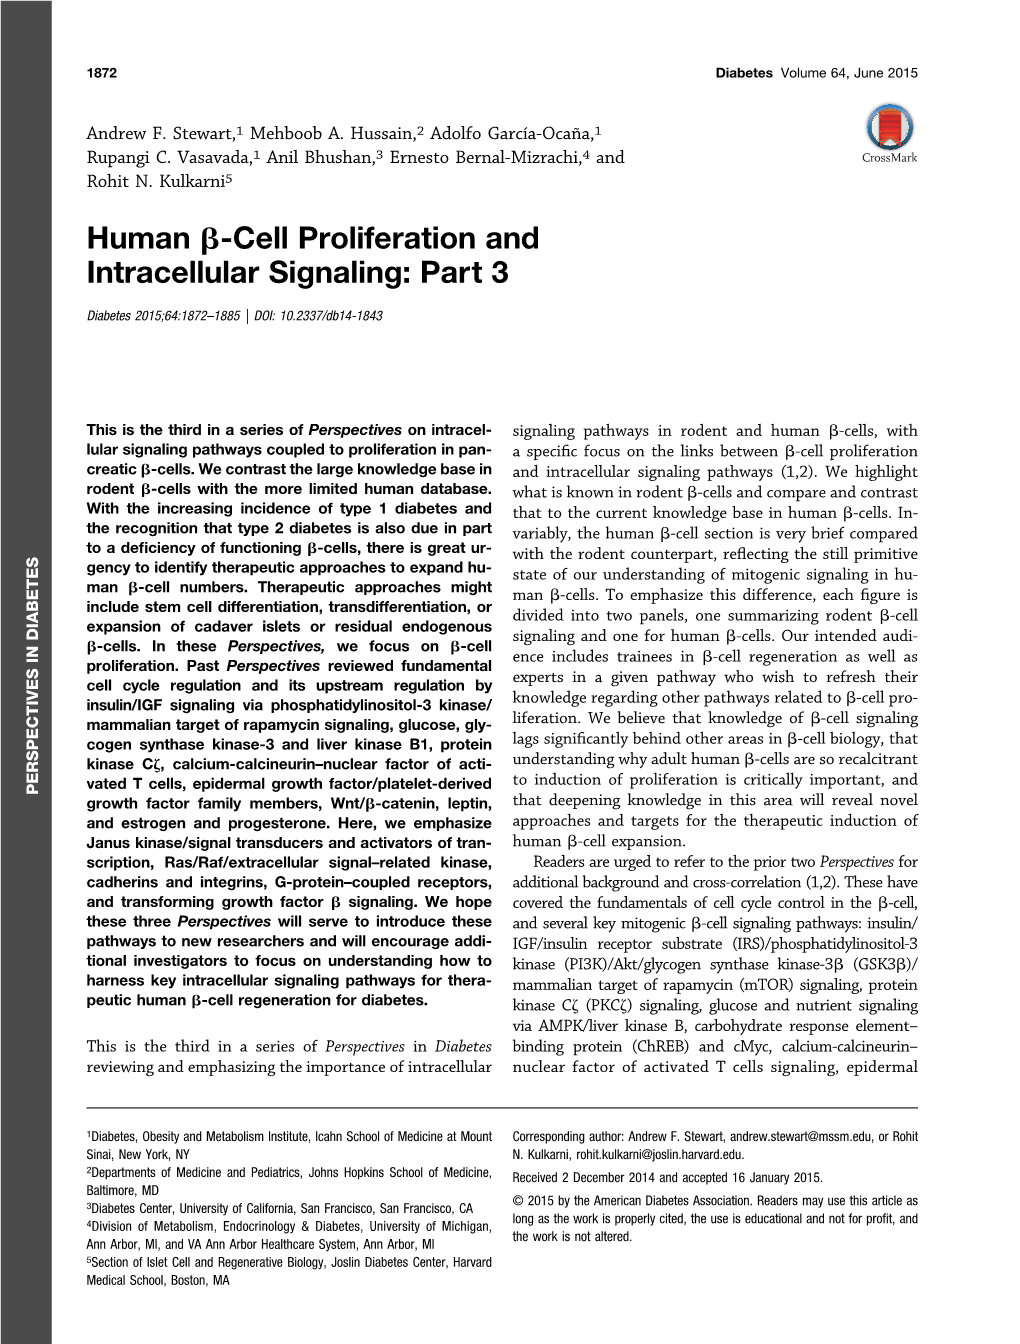 Human B-Cell Proliferation and Intracellular Signaling: Part 3